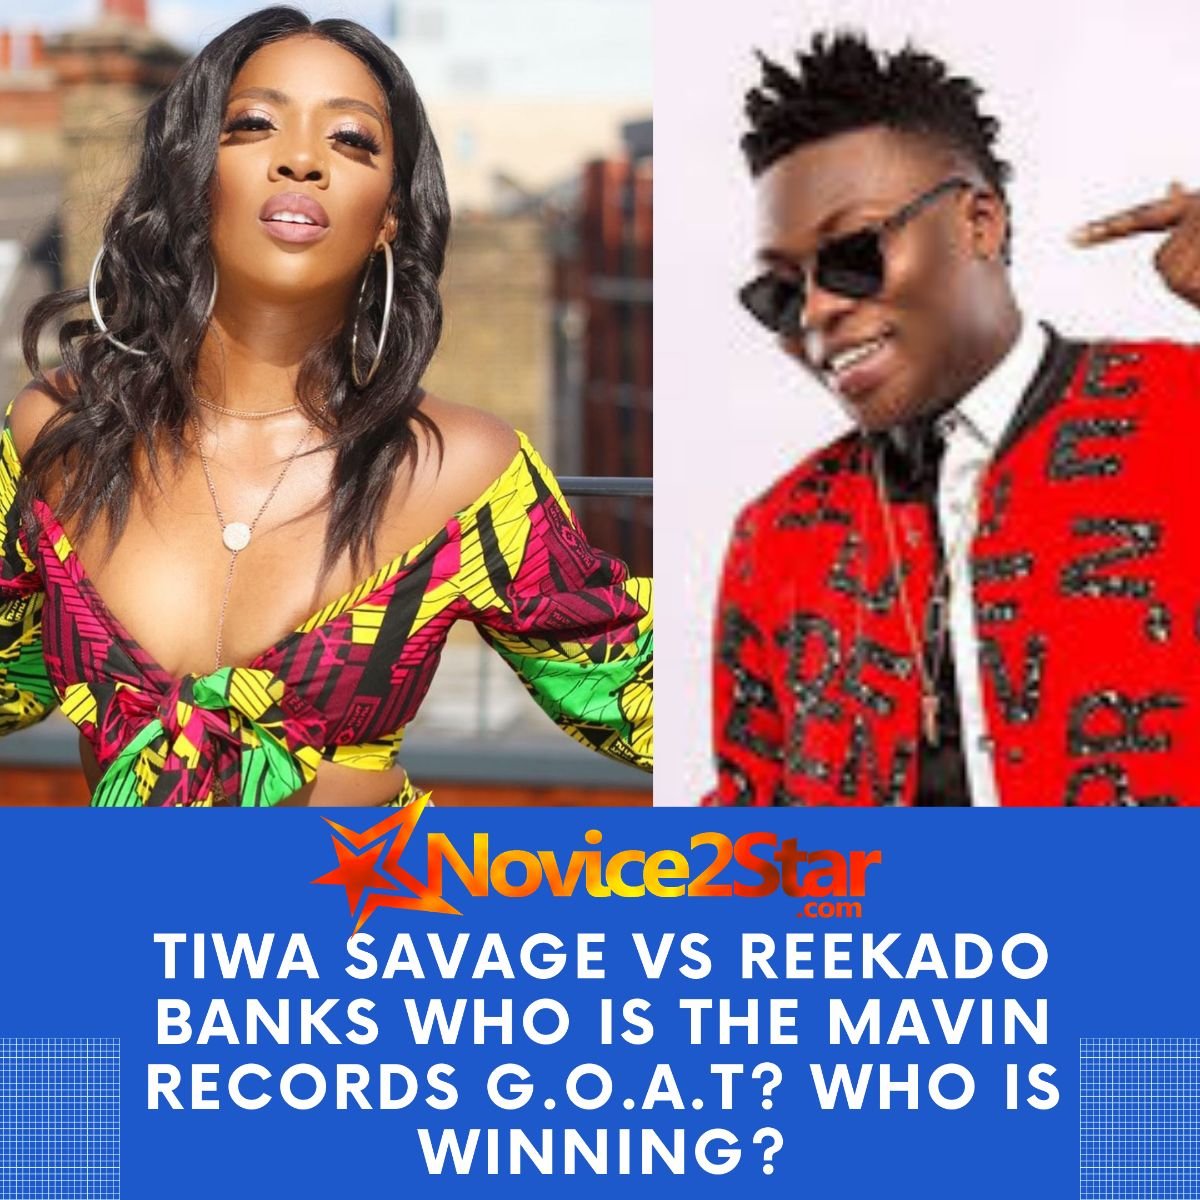 Tiwa Savage Vs Reekado Banks who is the Mavin Records G.O.A.T? Who is Winning?